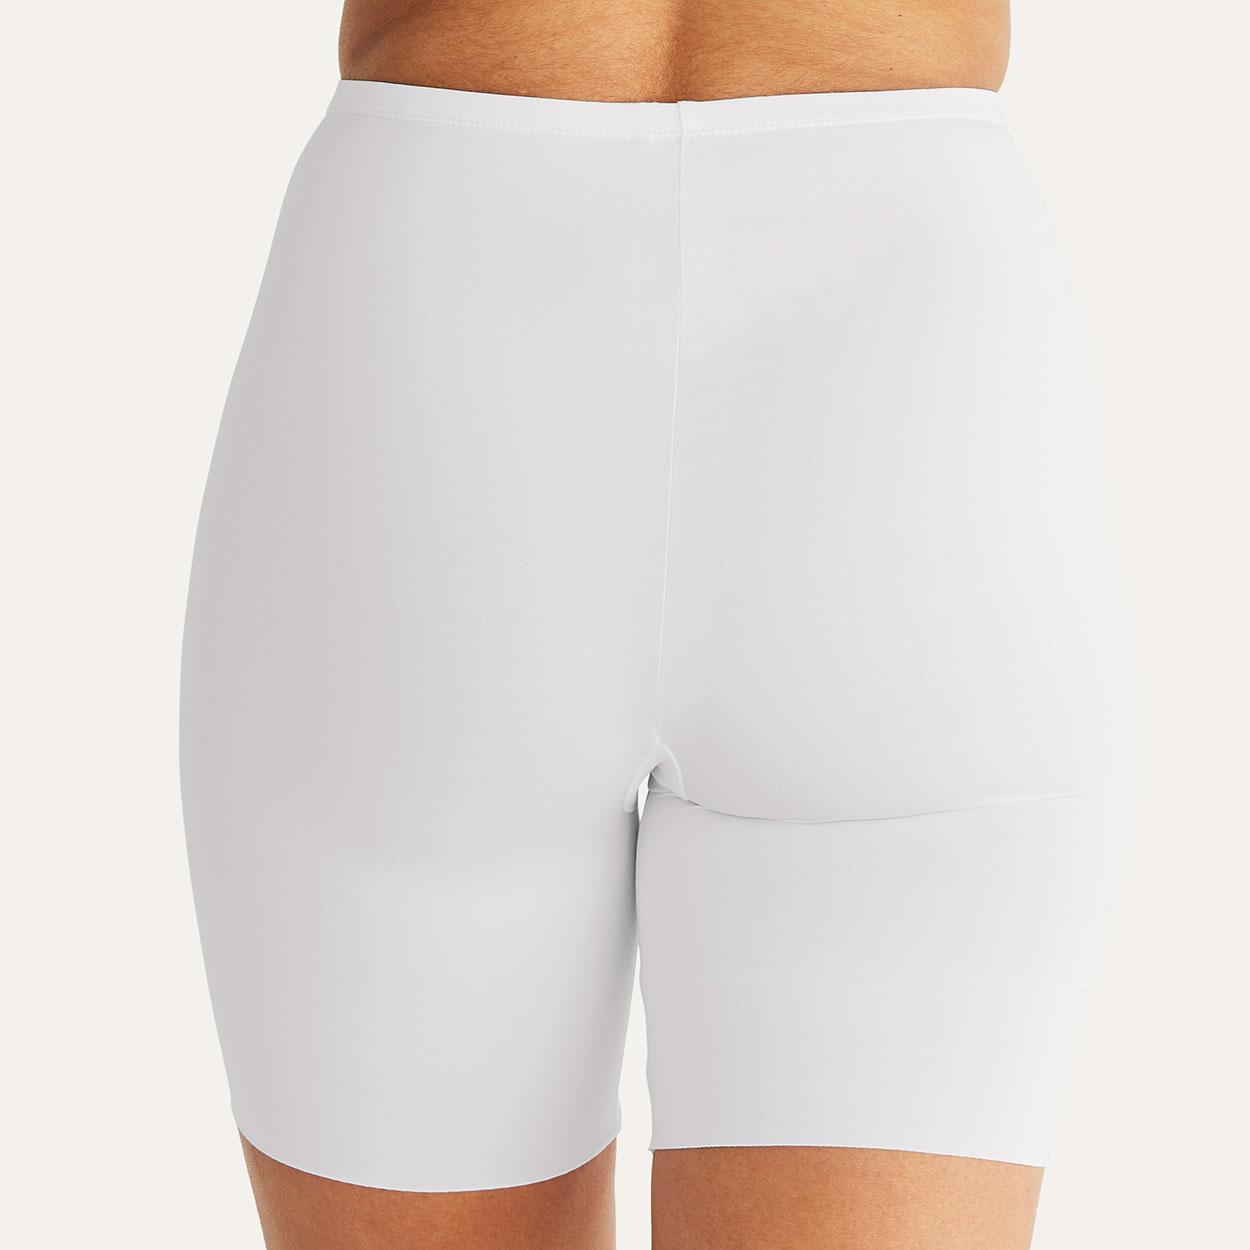 Swegmark Panty Cool & Dry in Farbe Weiß am Modell in der Rückansicht